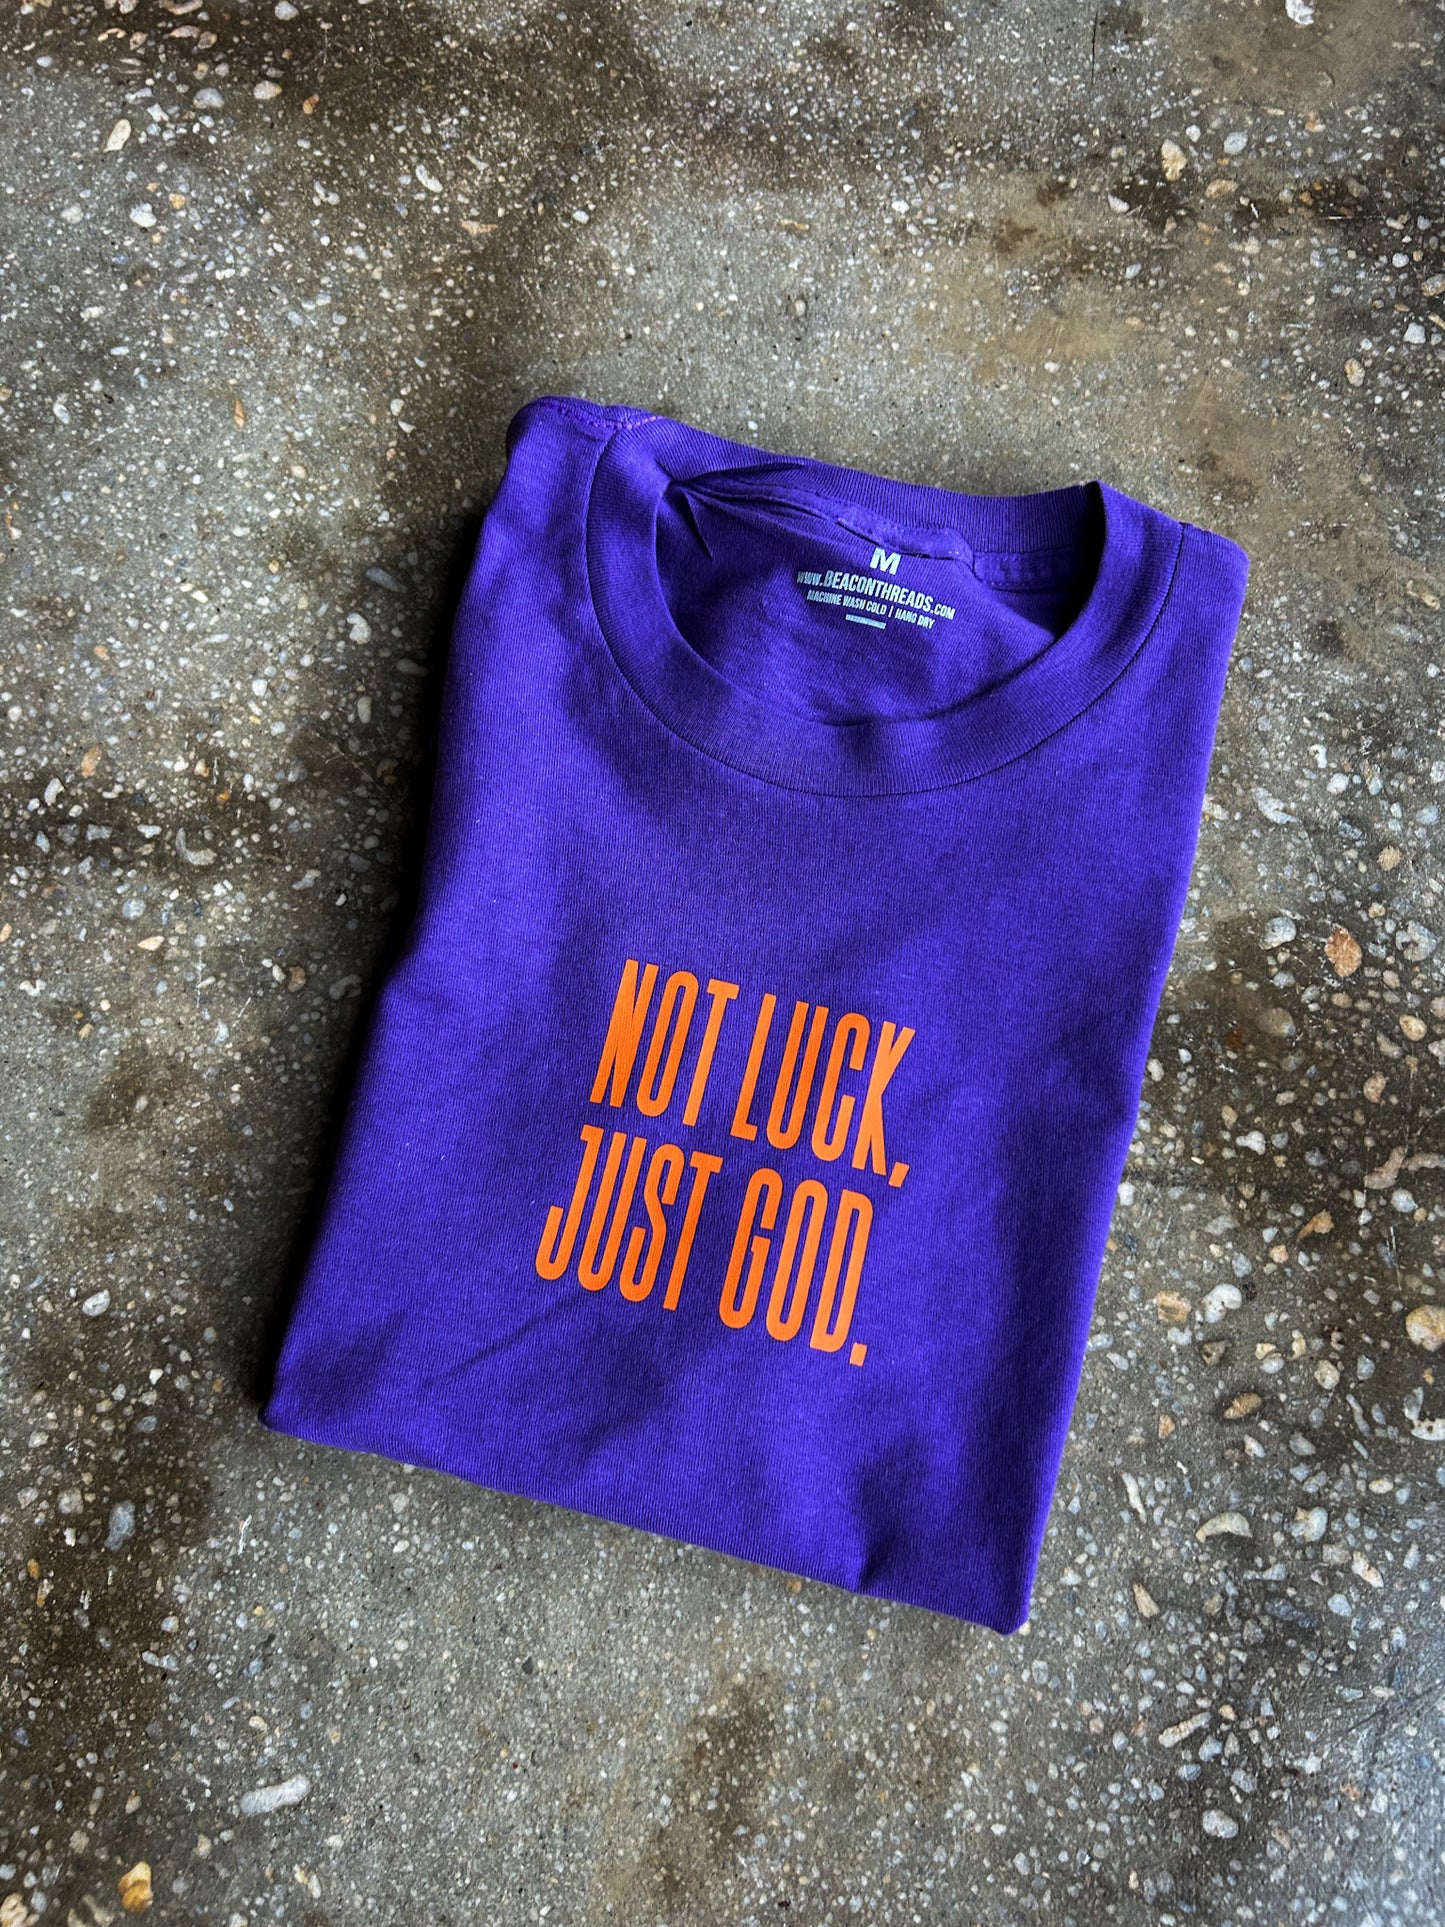 Not Luck, Just God. Adult Box T-Shirt